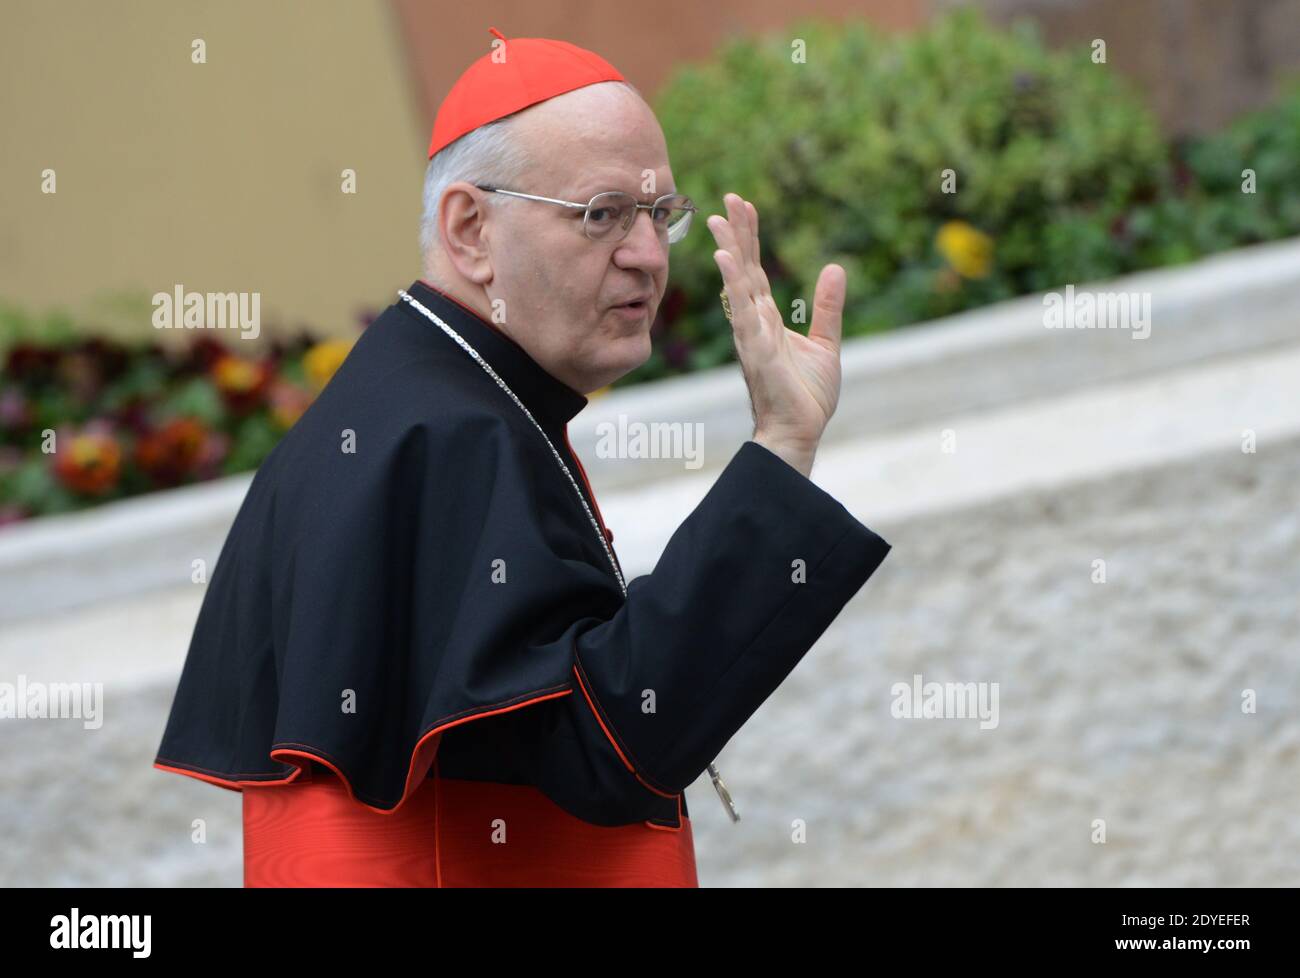 Cardinal peter erdo hi-res stock photography and images - Alamy